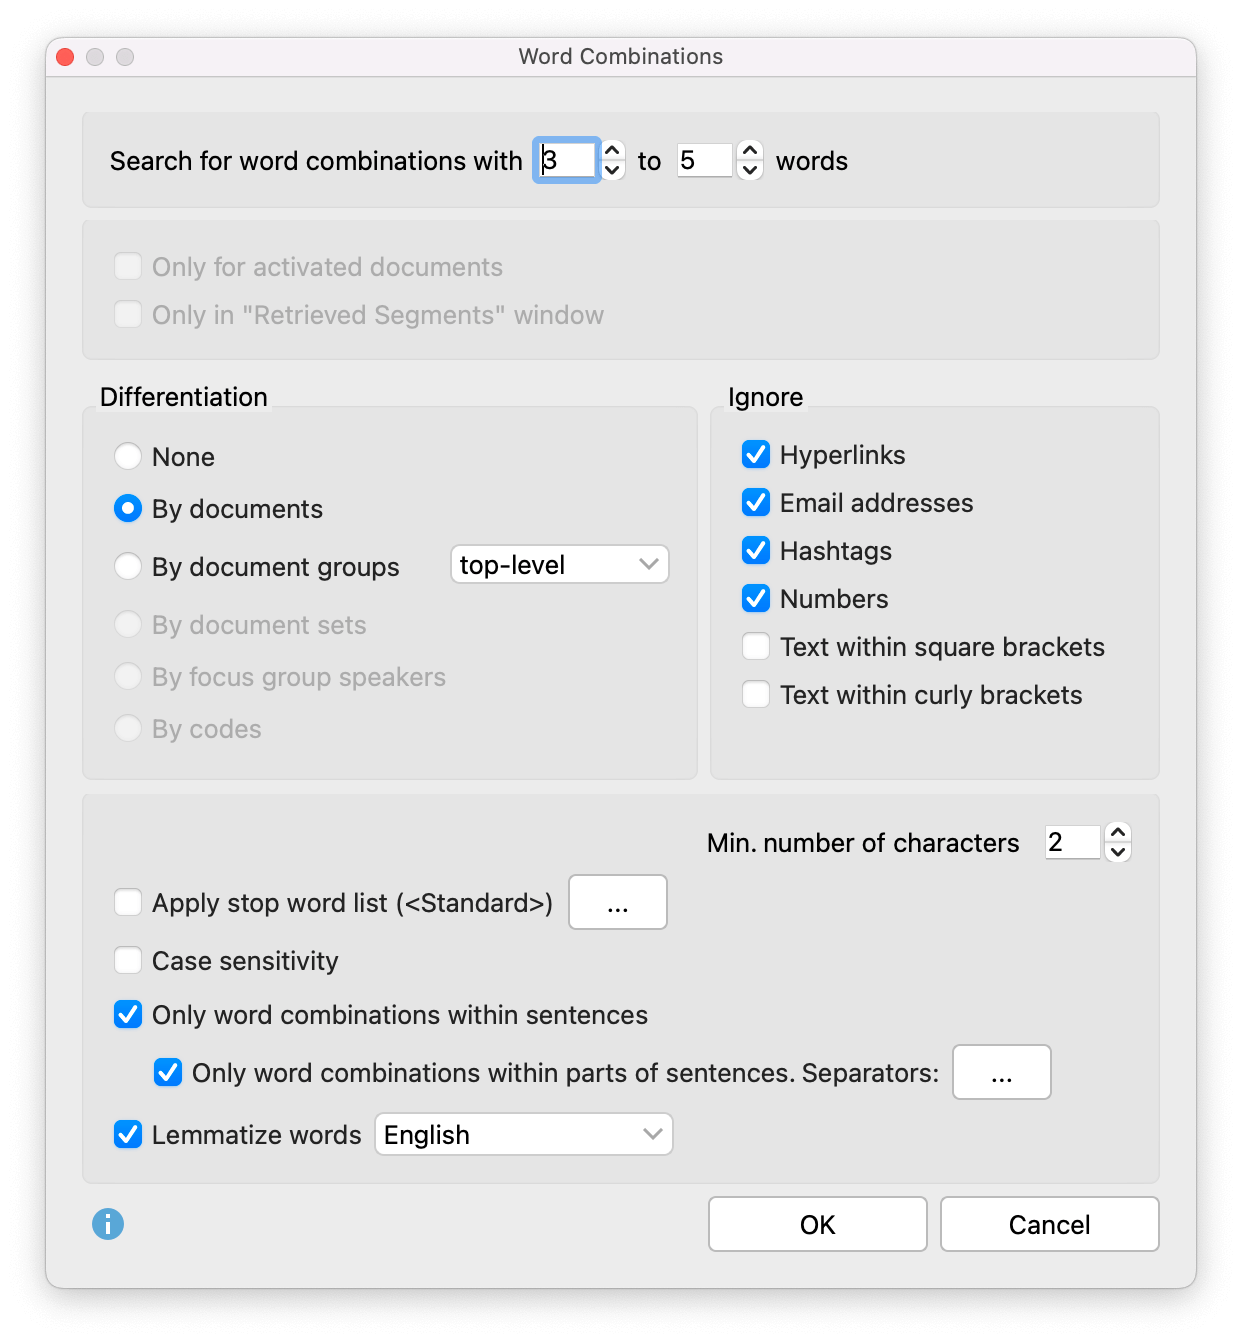 Word Combinations settings window